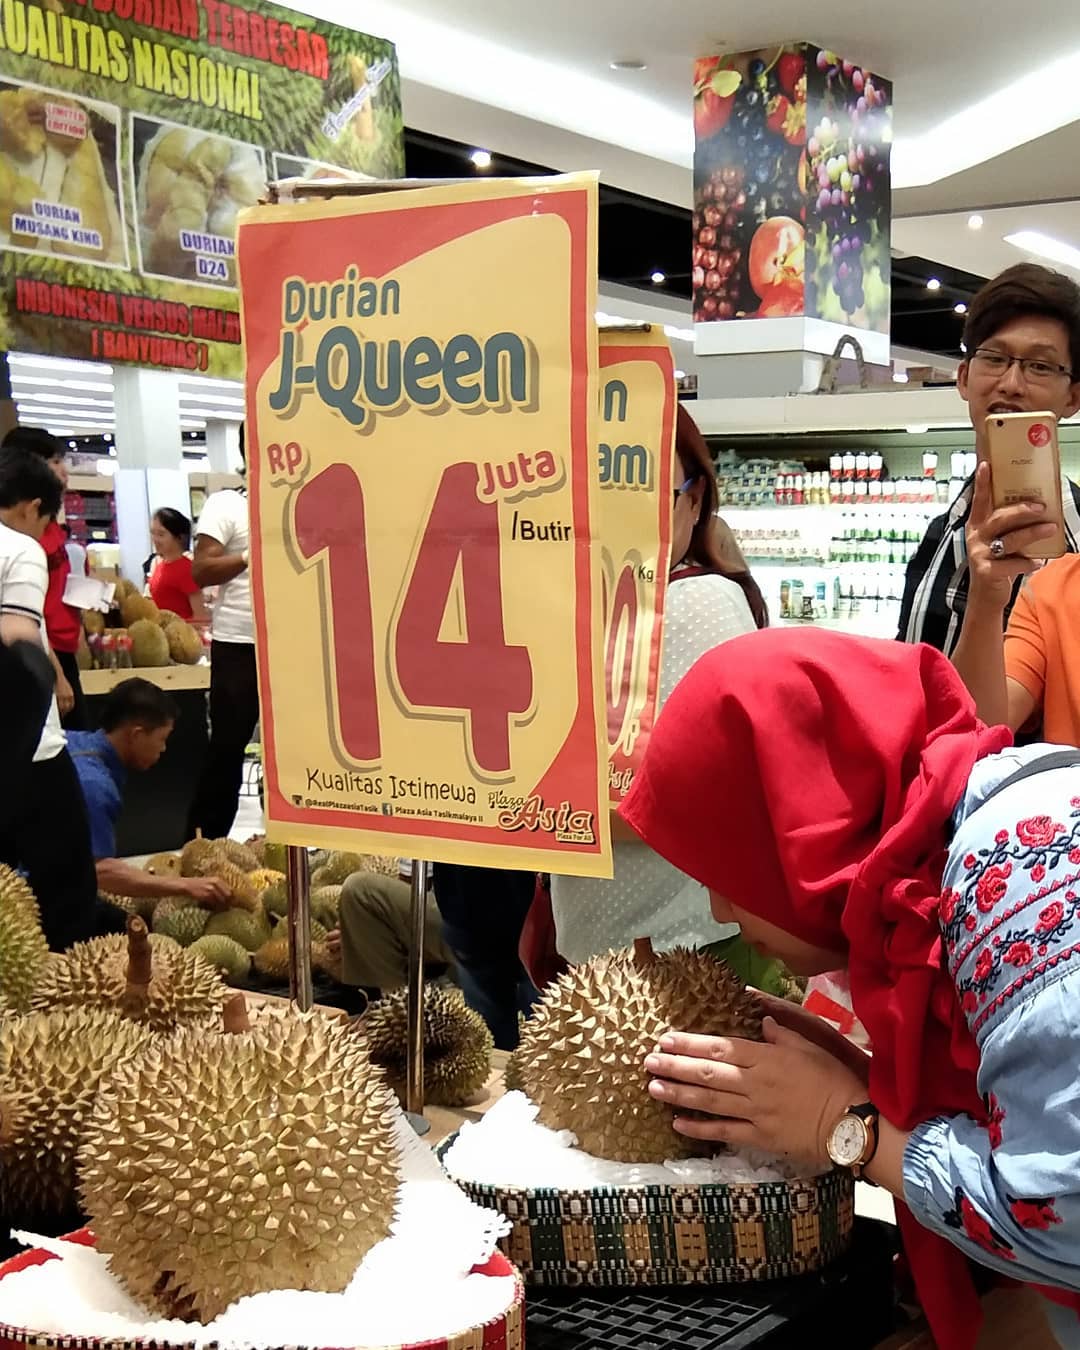 4k Durian - WORLD OF BUZZ 2